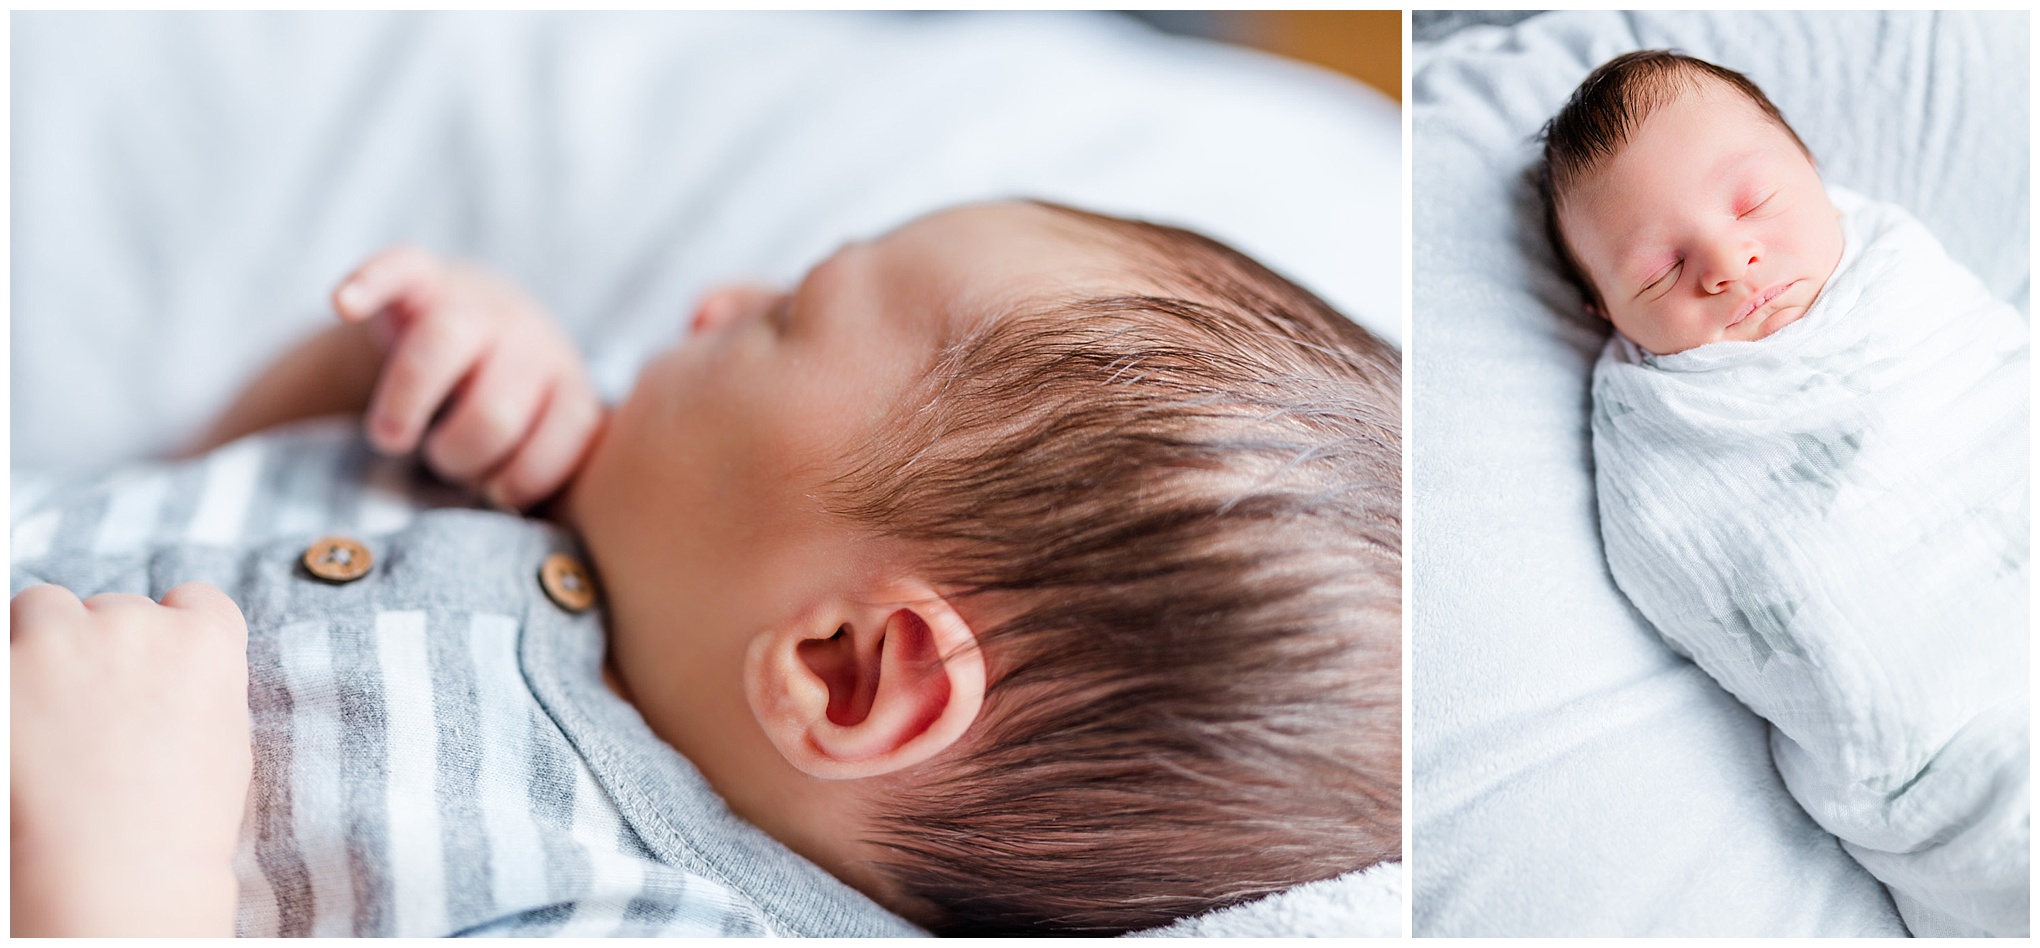 Georgetown newborn photos, baby ears, newborn baby, newborn, swaddled